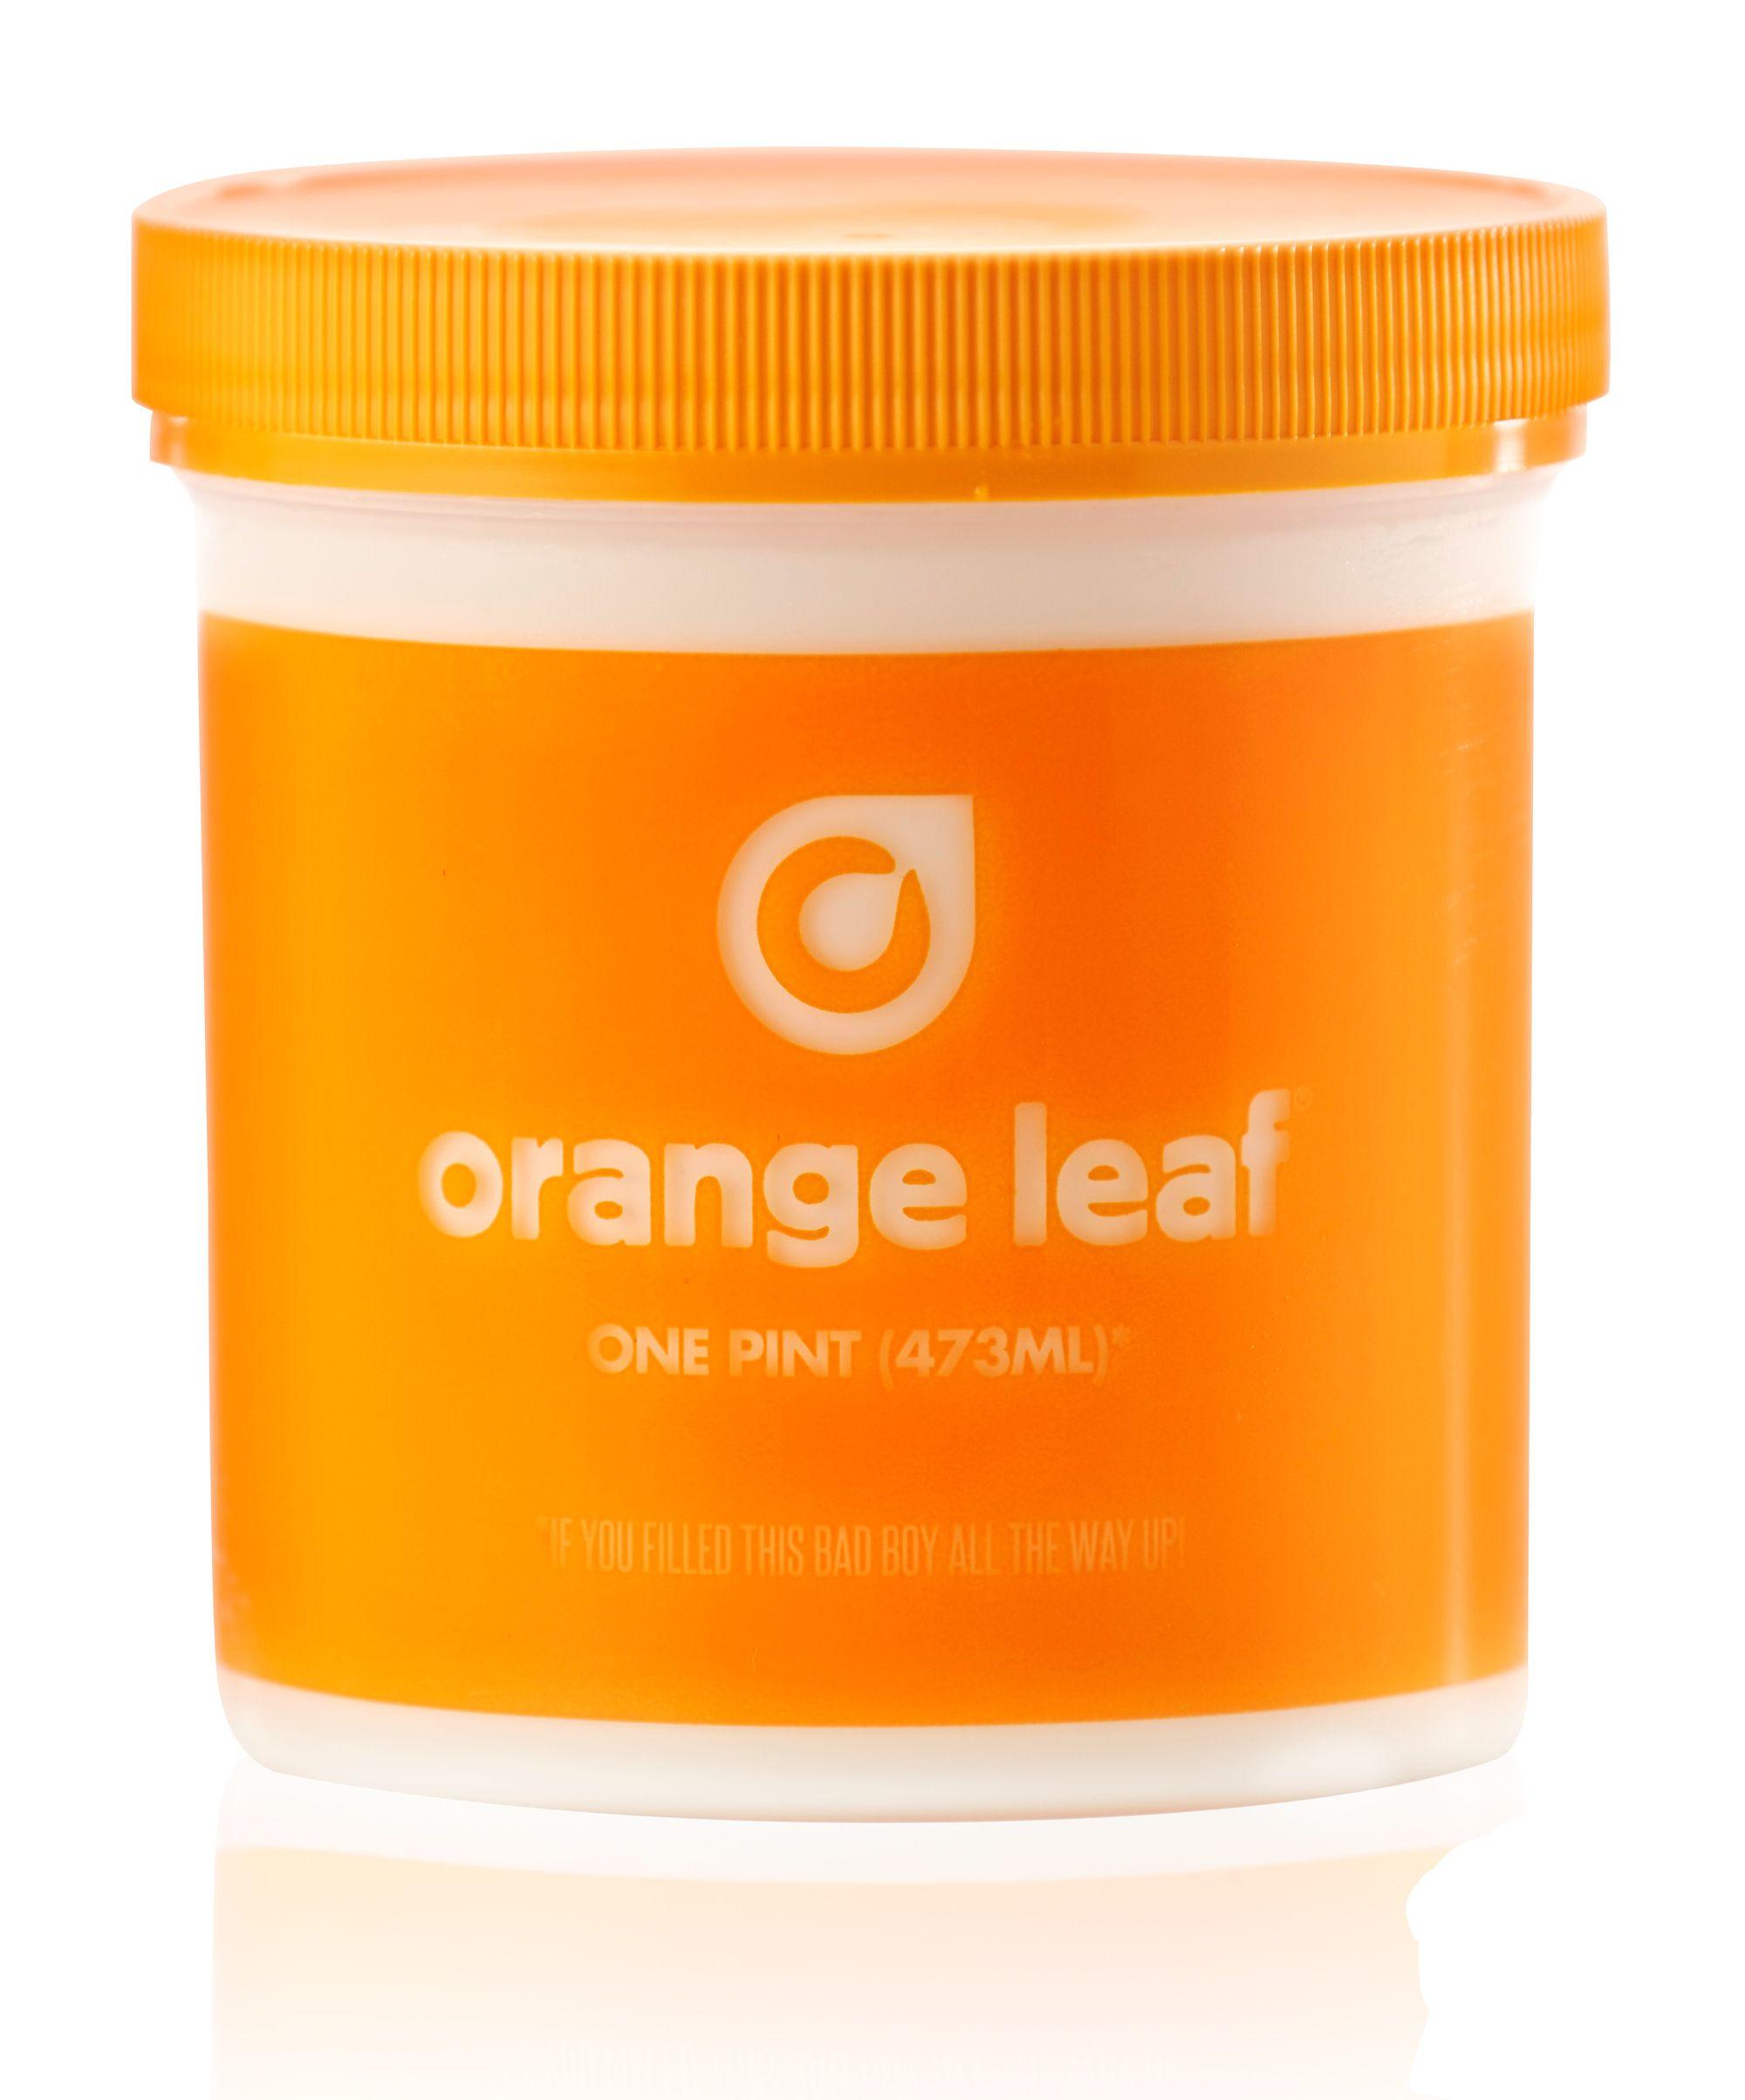 Orange Leaf Yogurt Logo - Orange Leaf Frozen Yogurt Launches Orange Leaf to Go